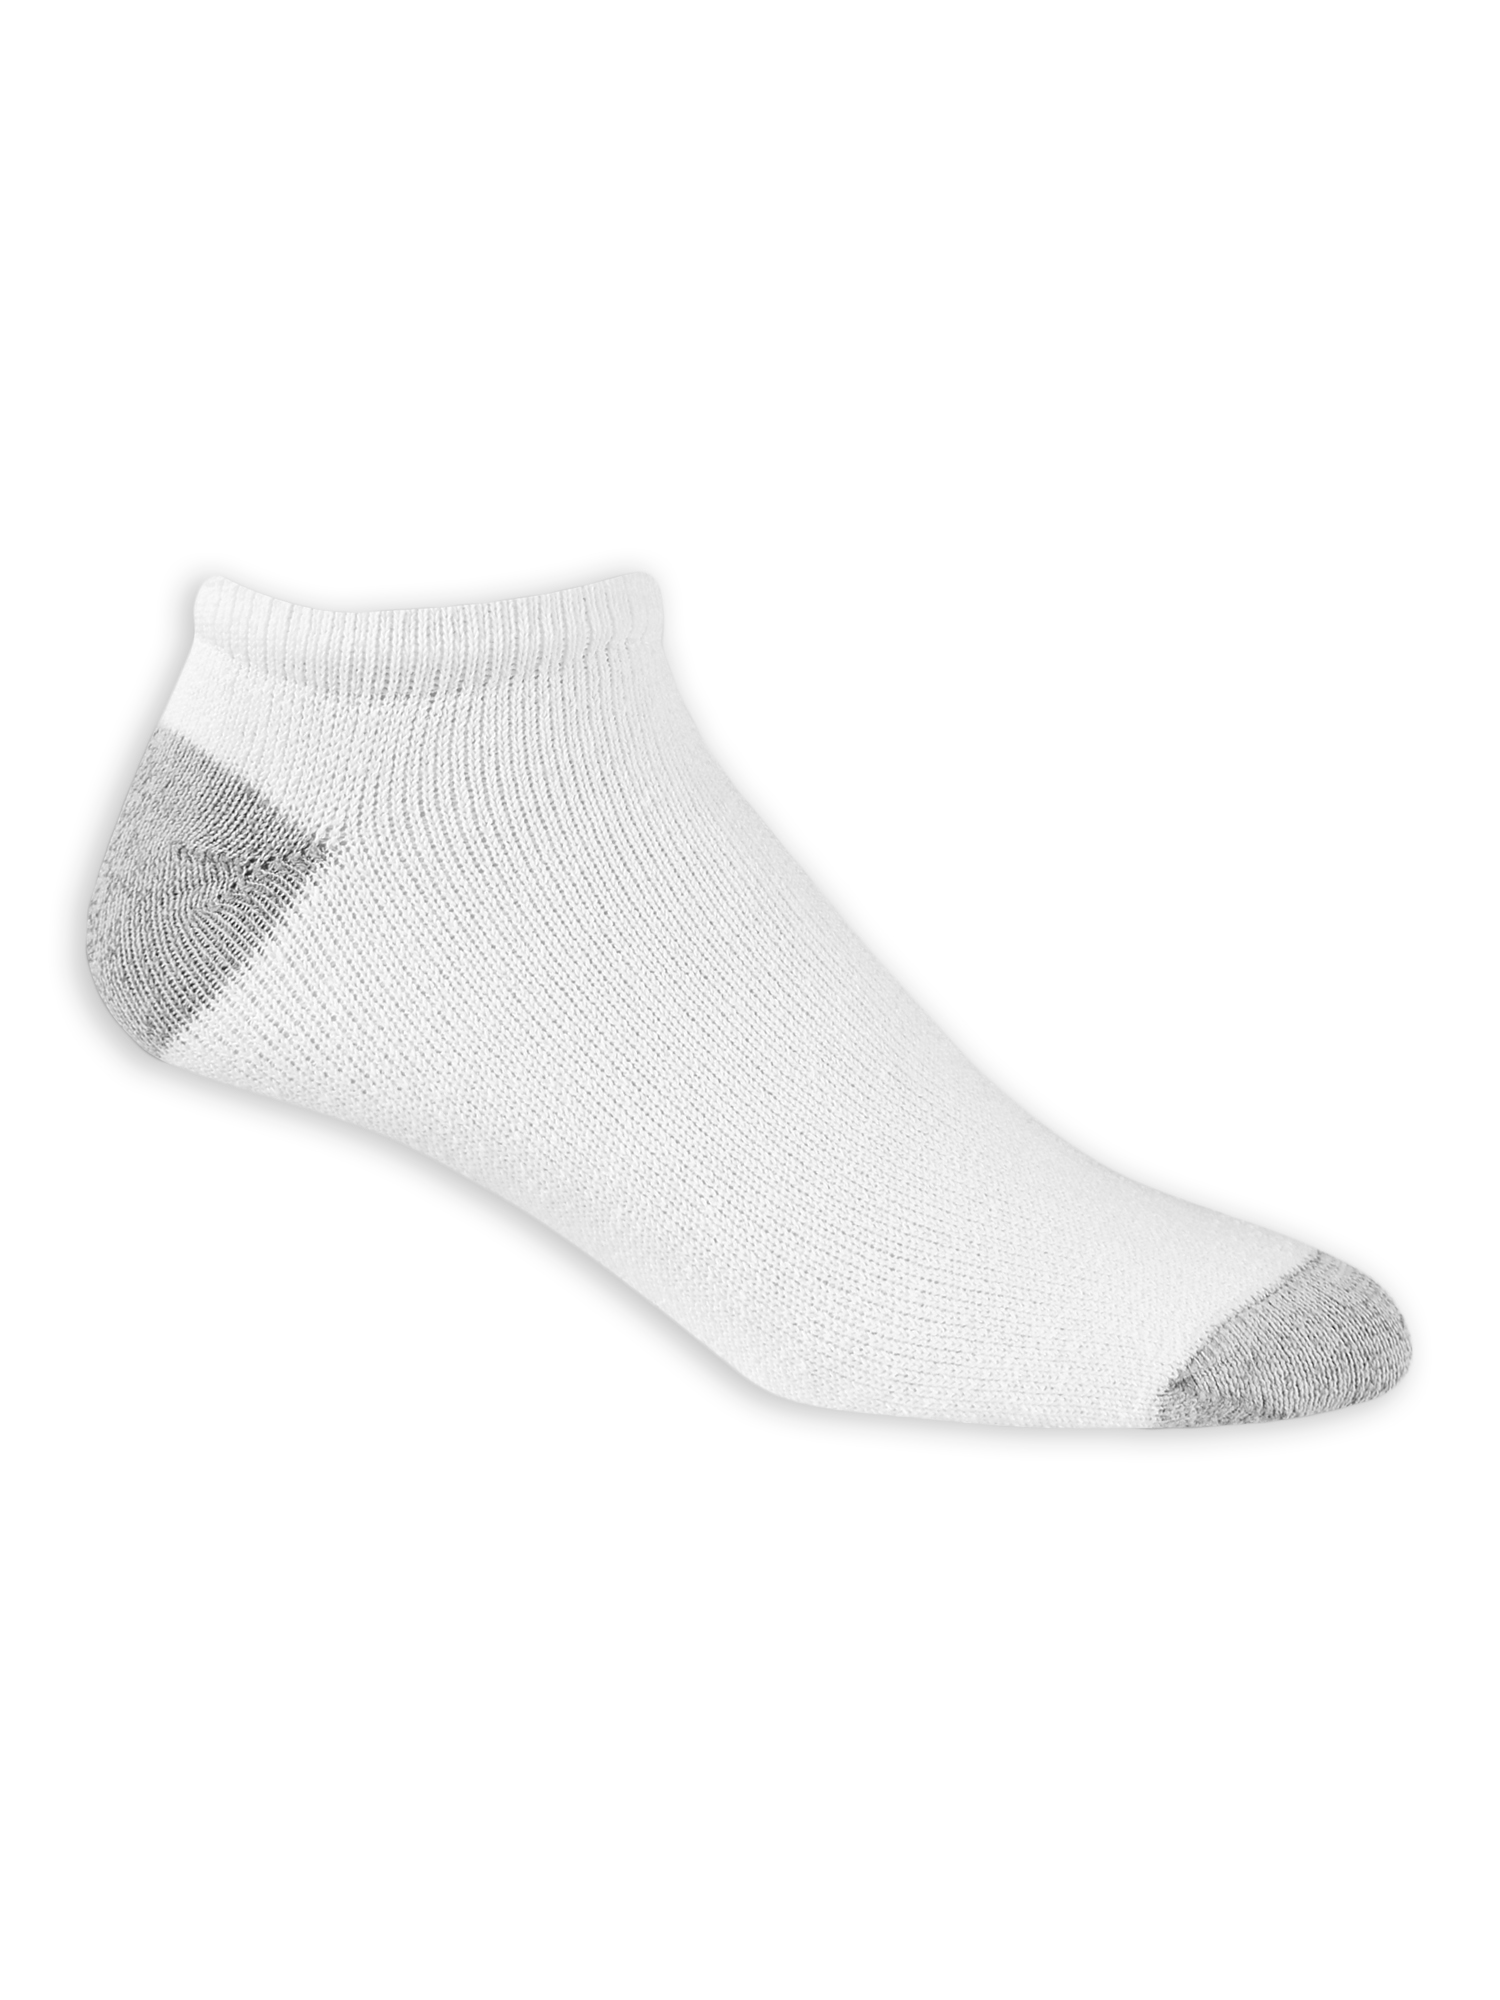 Men's No Show Socks 10 Pack - image 2 of 3